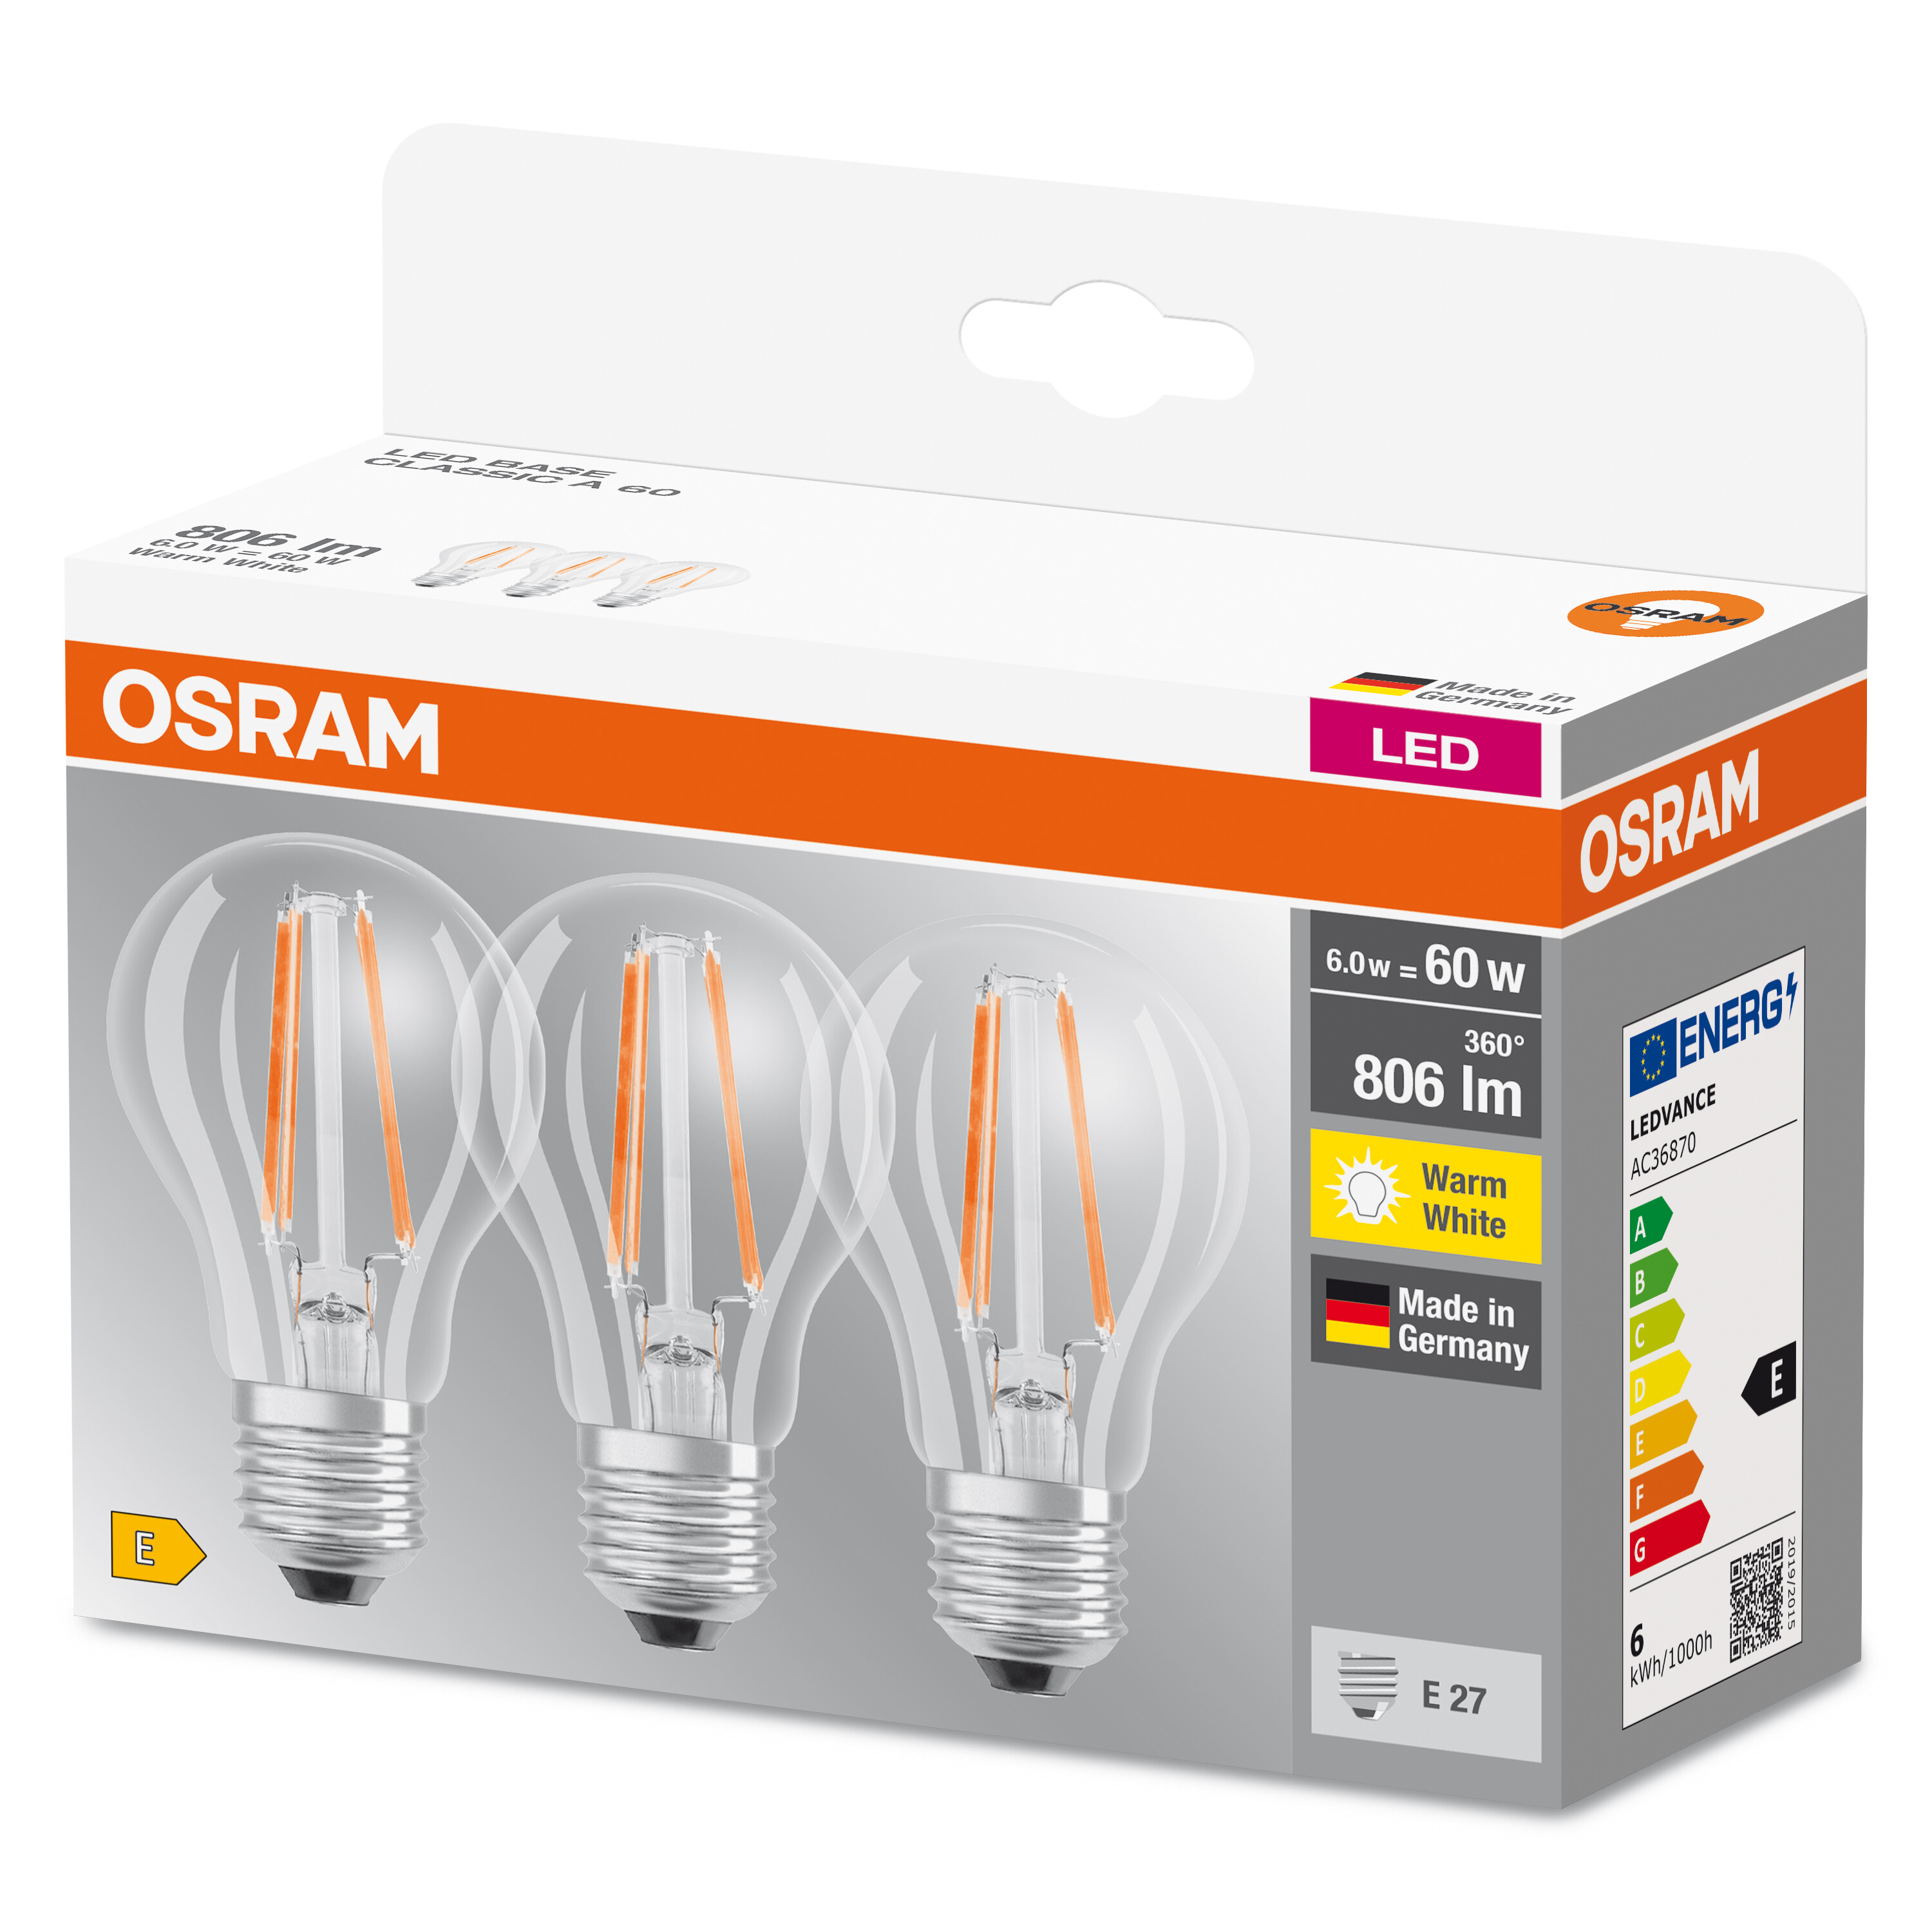 OSRAM  LED BASE CLASSIC A Warmweiß 806 Lumen Lampe LED